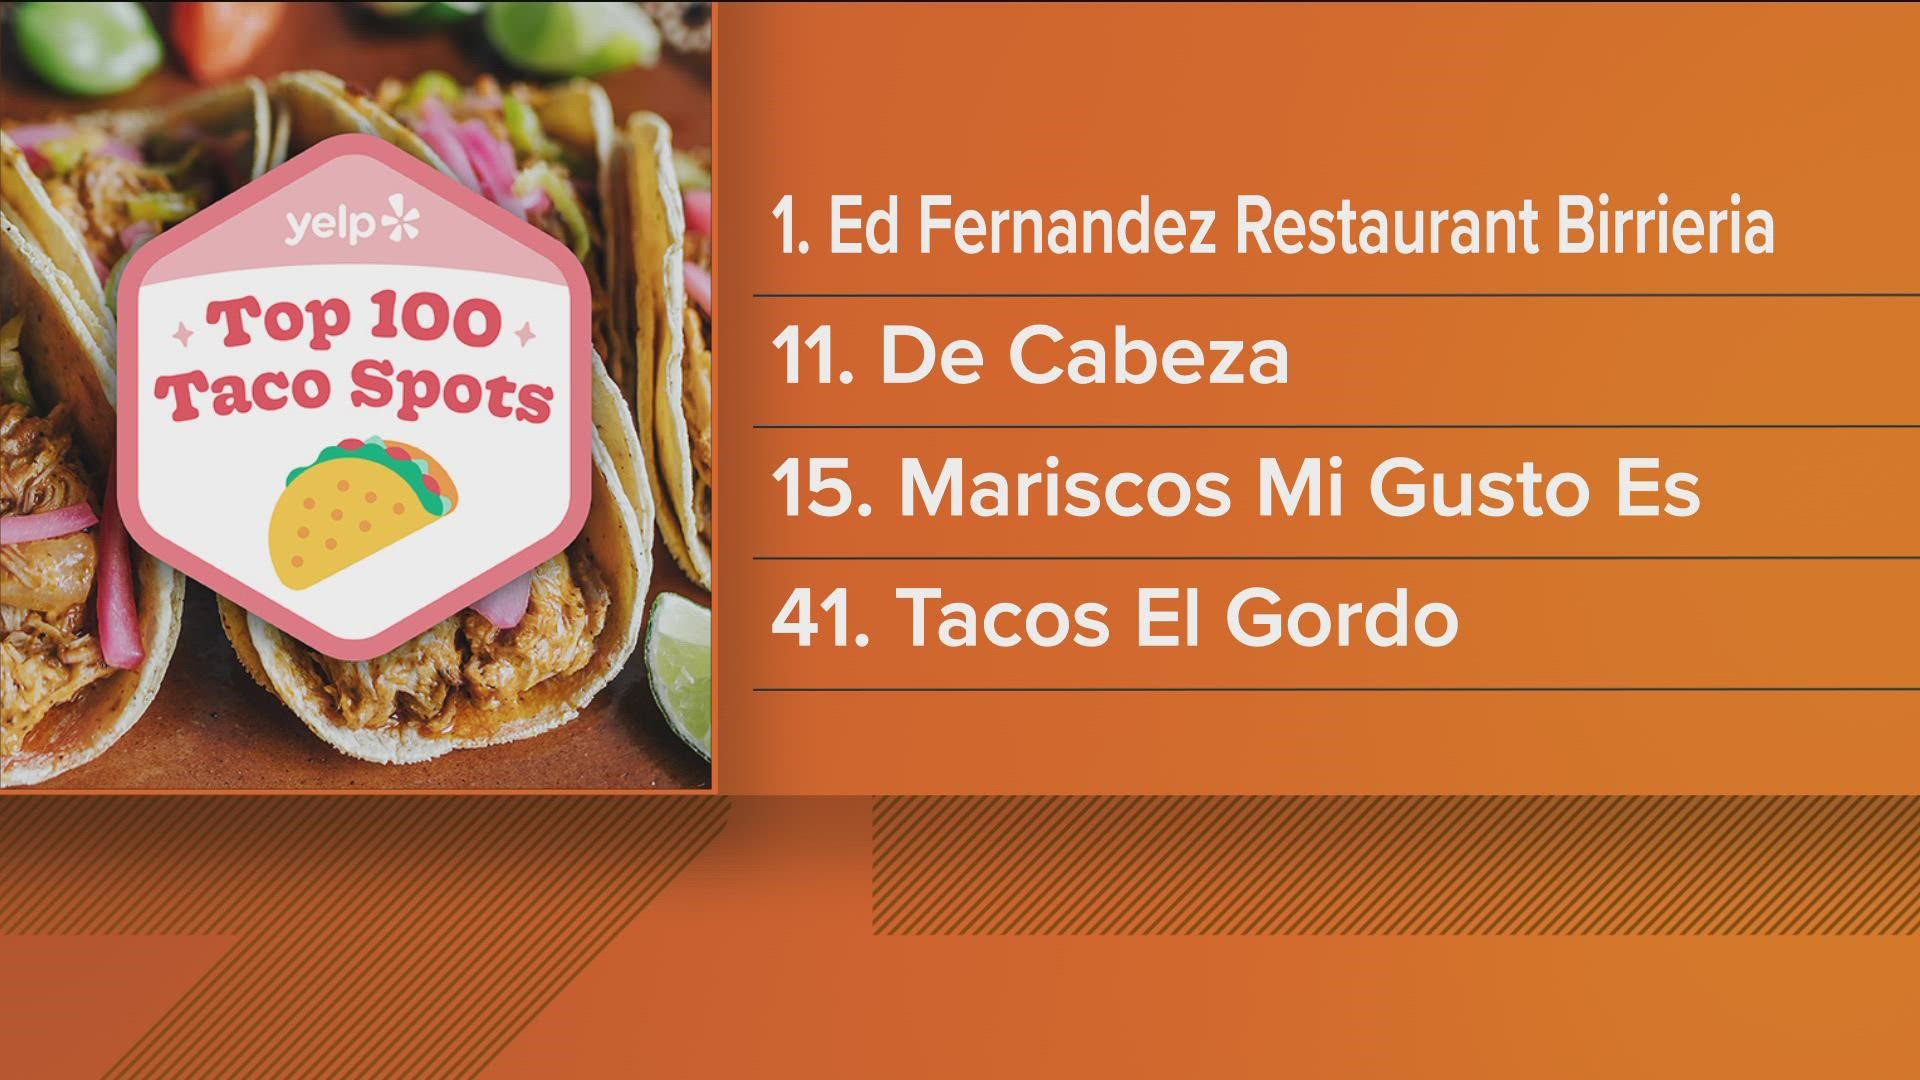 Ed Fernandez Restaurant Birrieria located on 2265 Flower Avenue in South San Diego was ranked No. 1 !